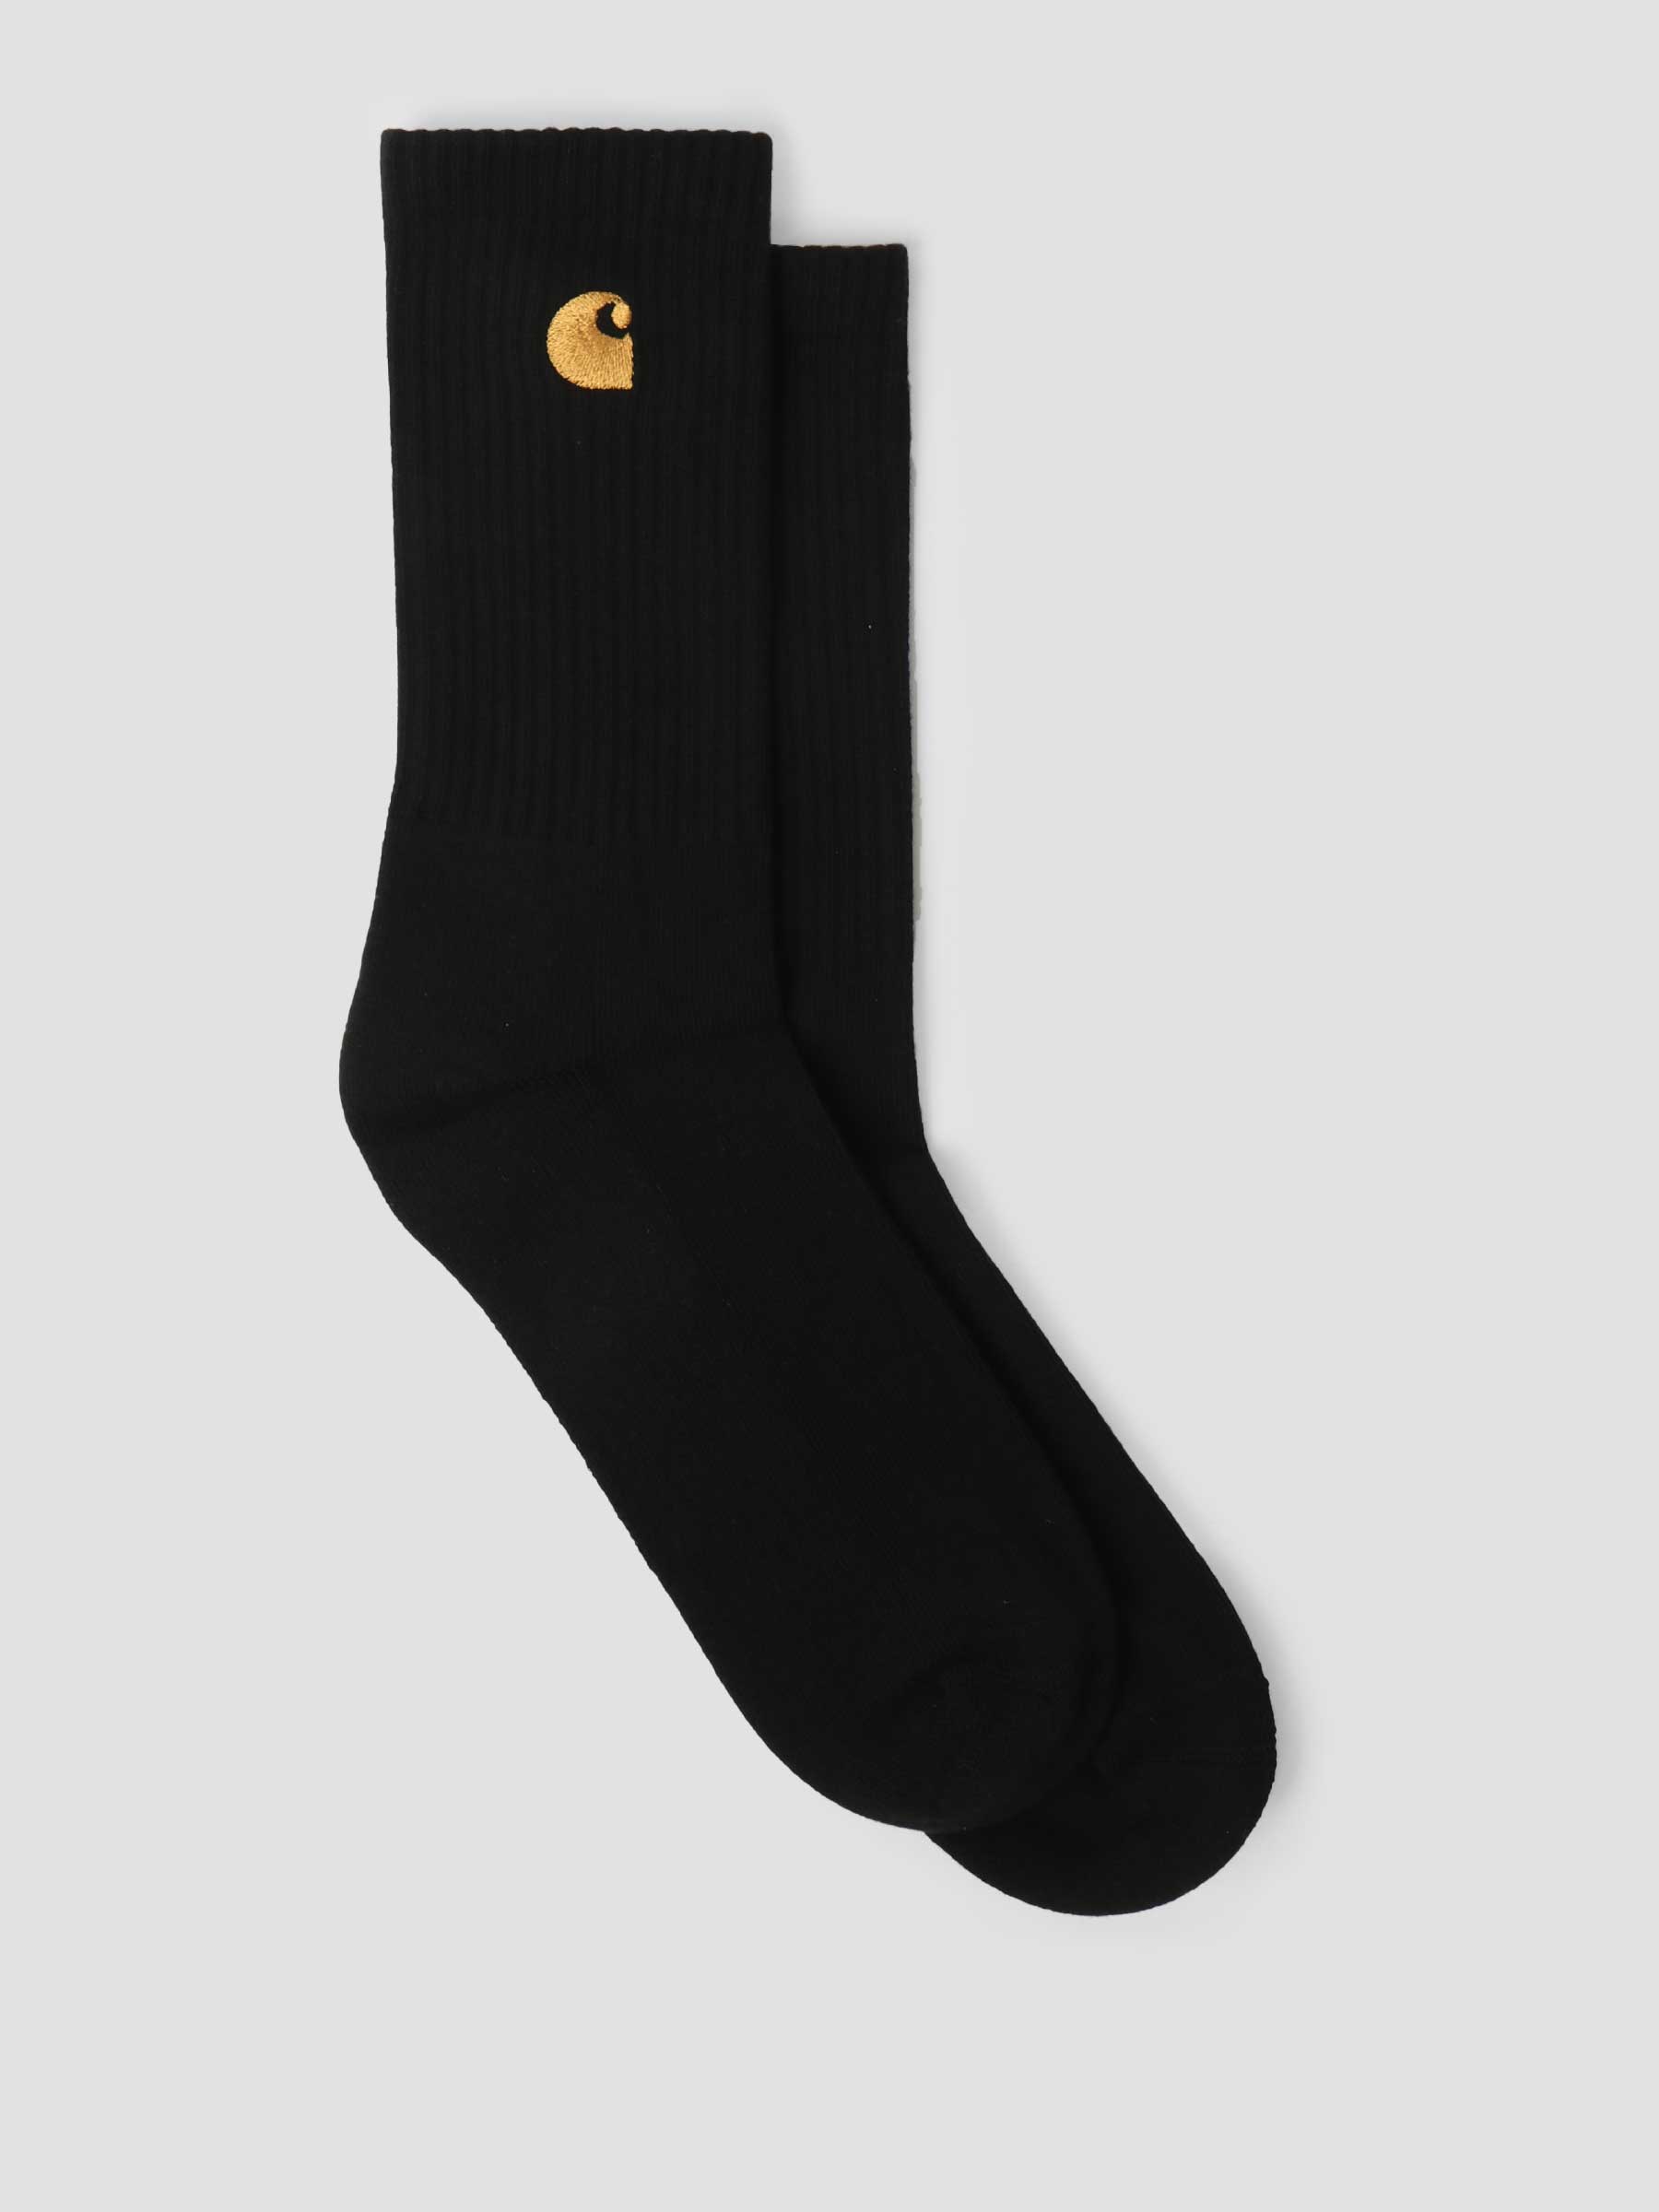 Chase Socks Black Gold I029421